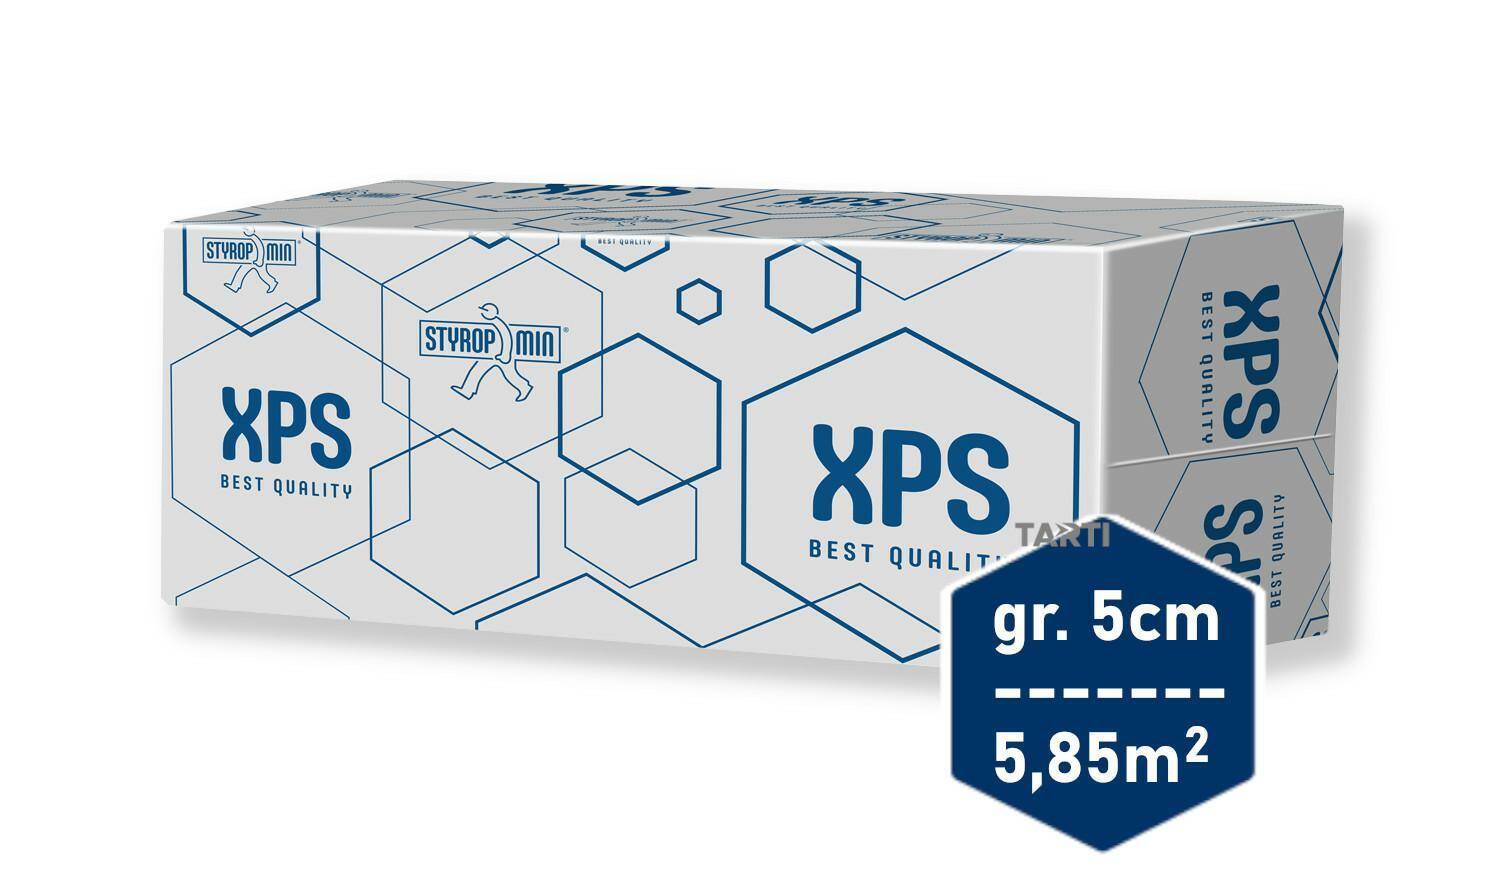 Styropmin XPS-300 gr.5cm frez